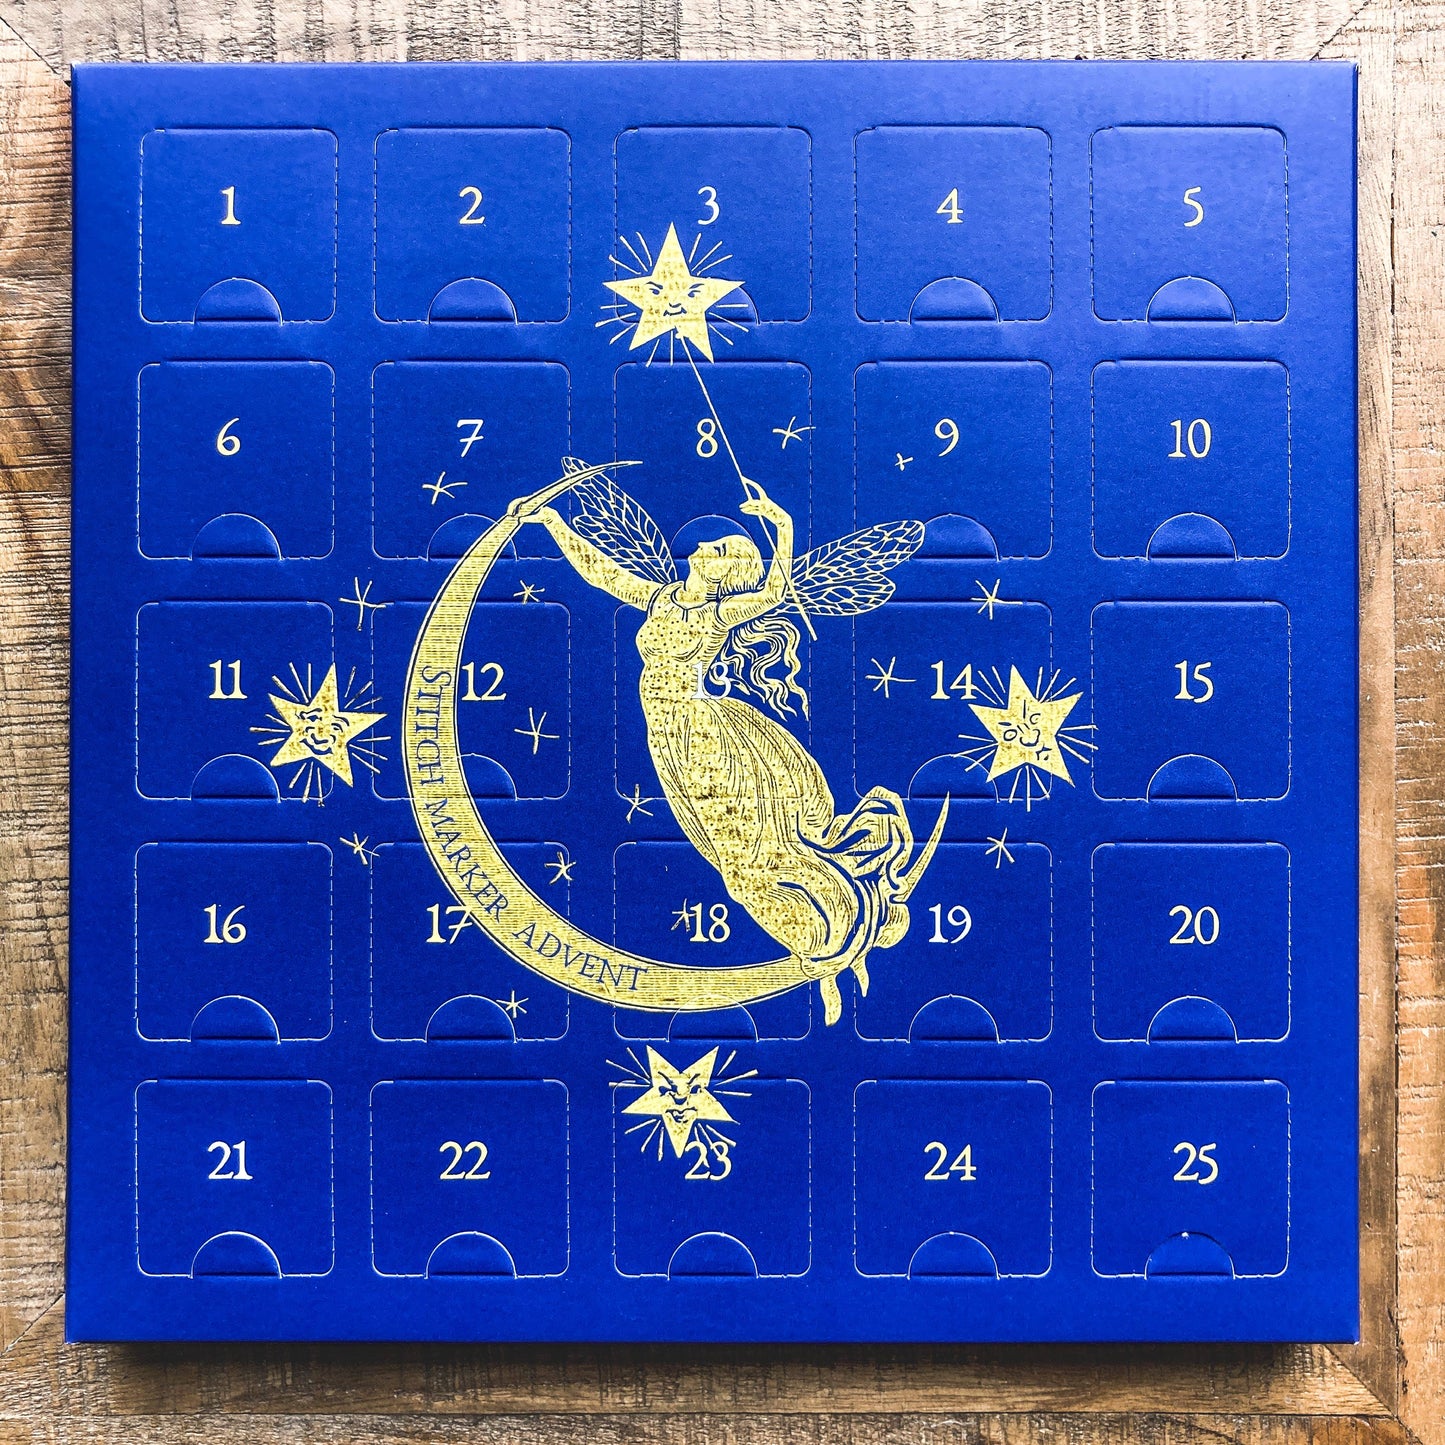 Firefly Notes Stitch Marker Advent calendar